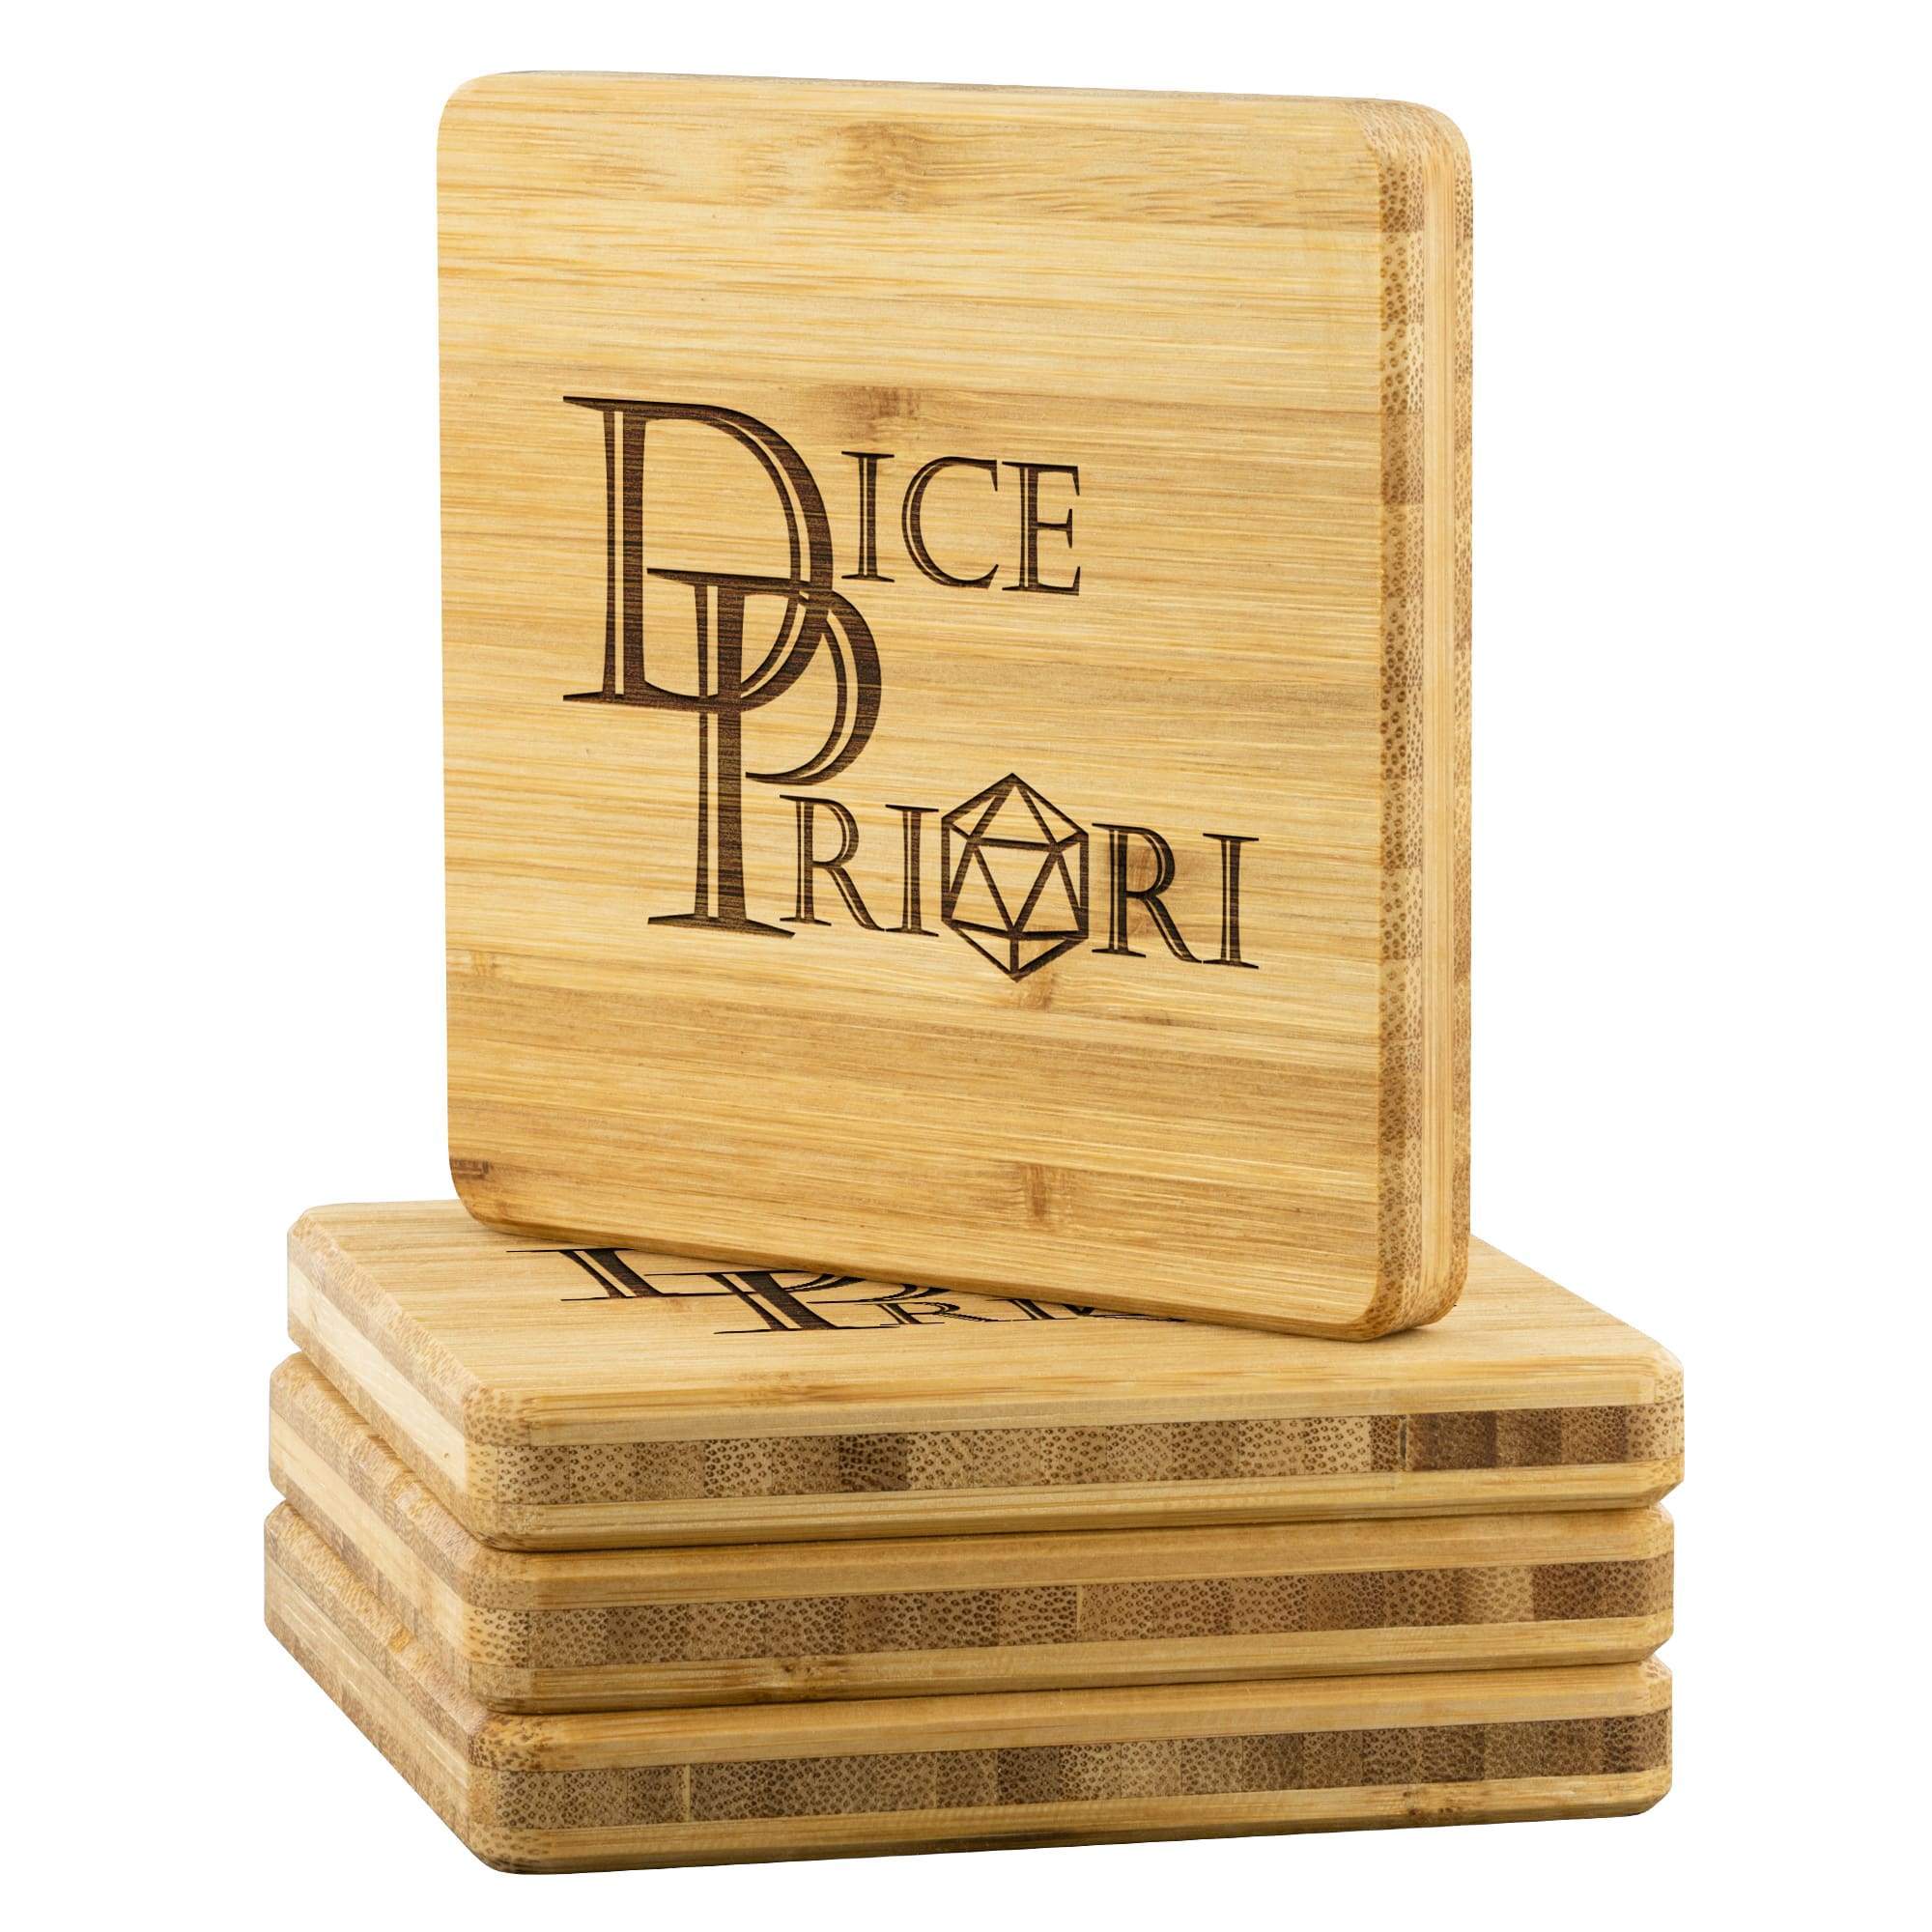 Dice Priori Classic Text Logo Bamboo Coasters (Set of 4) - Coasters